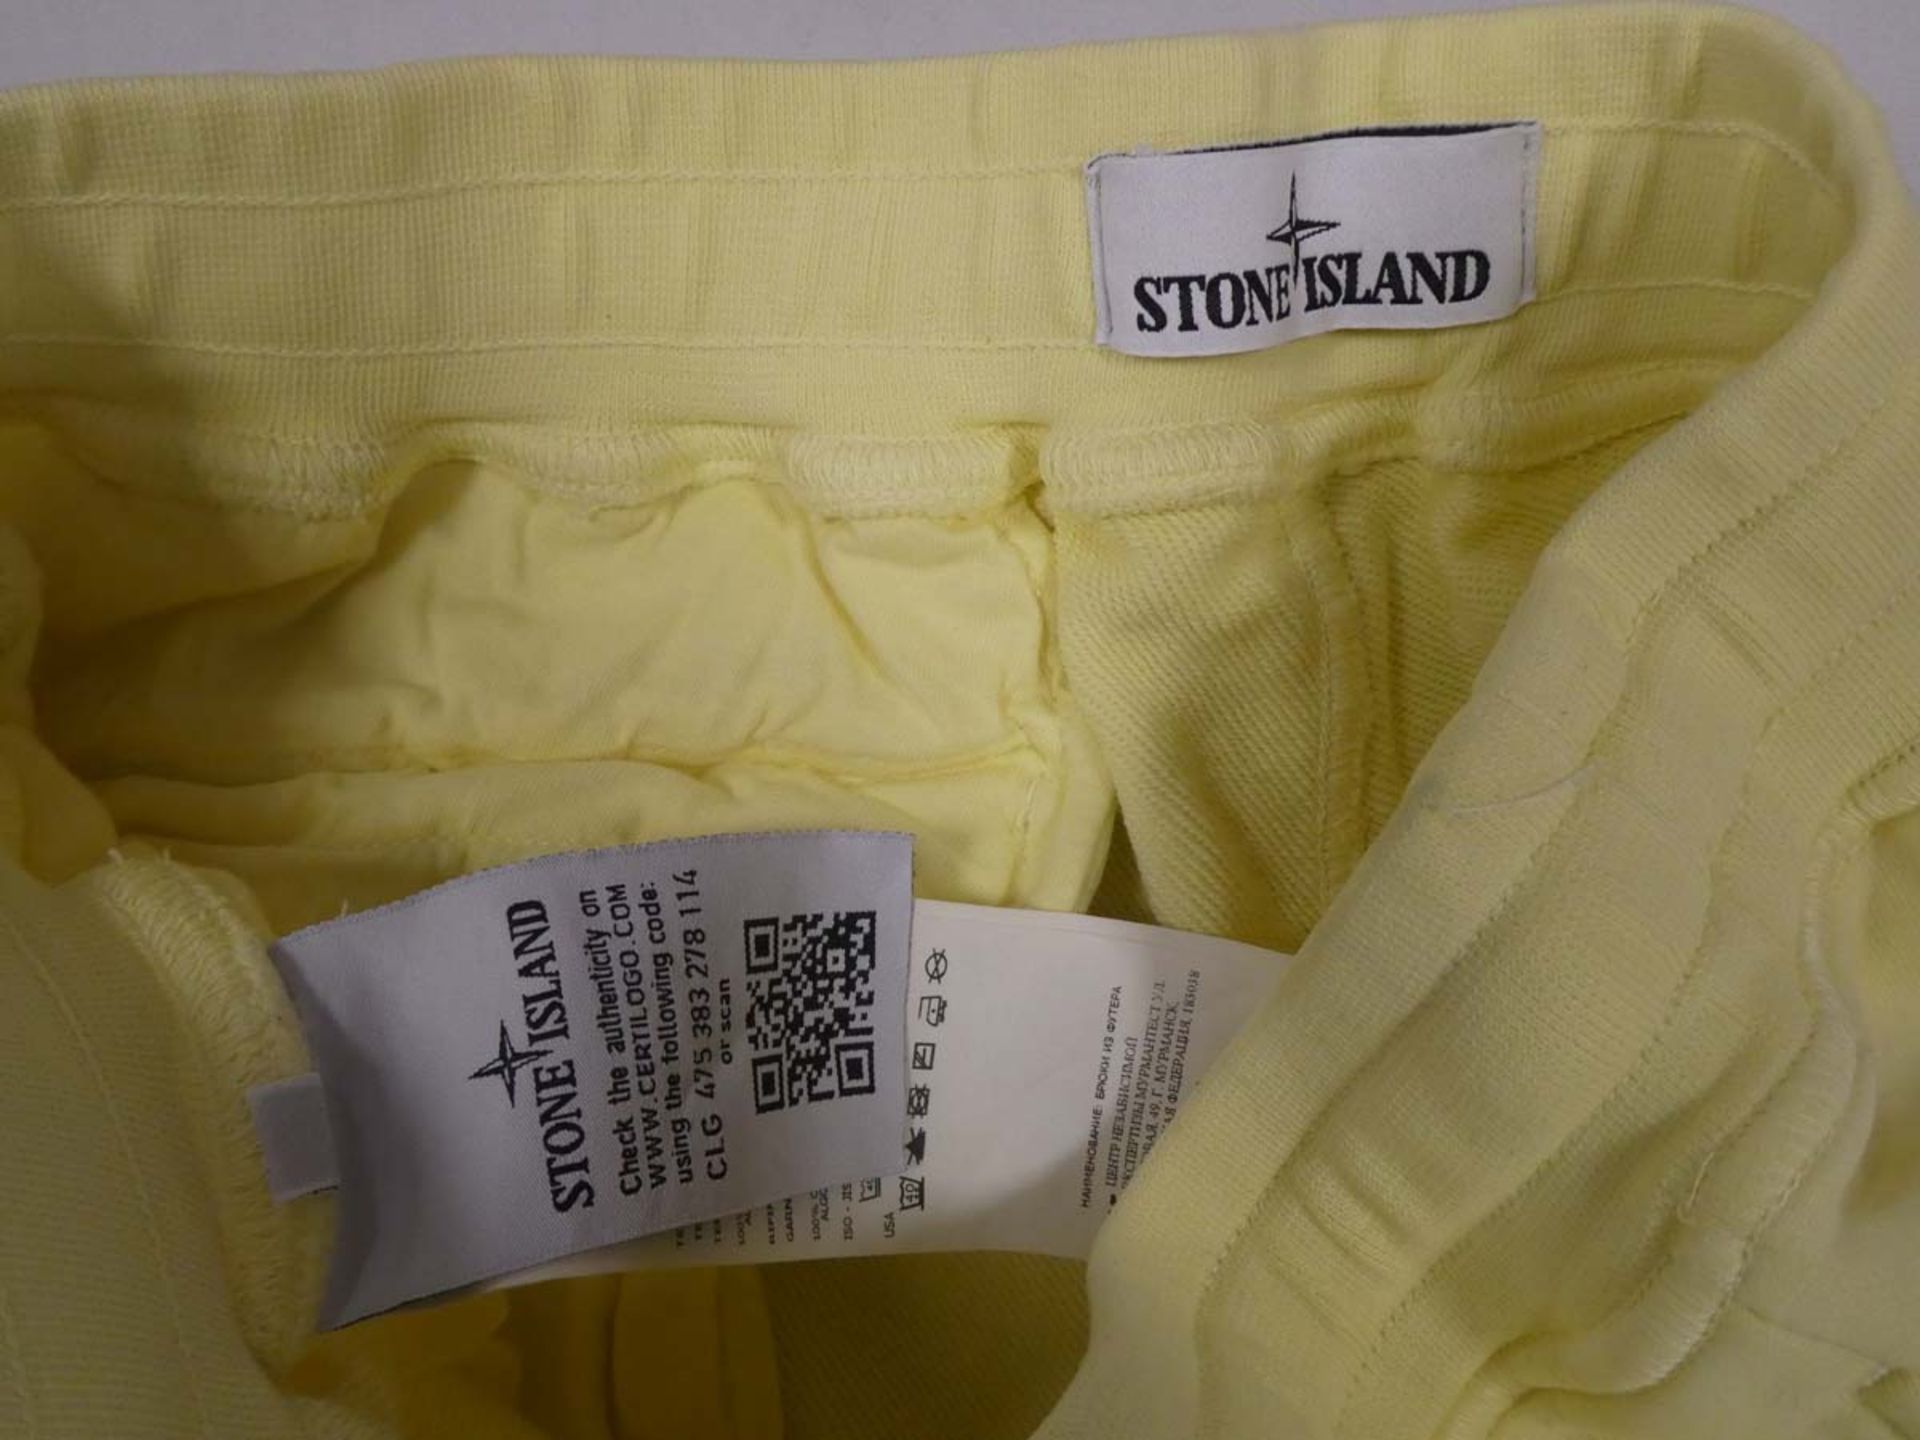 Stone Island sweat pants in light yellow size small ART. 741564551 (bagged) - Image 2 of 2